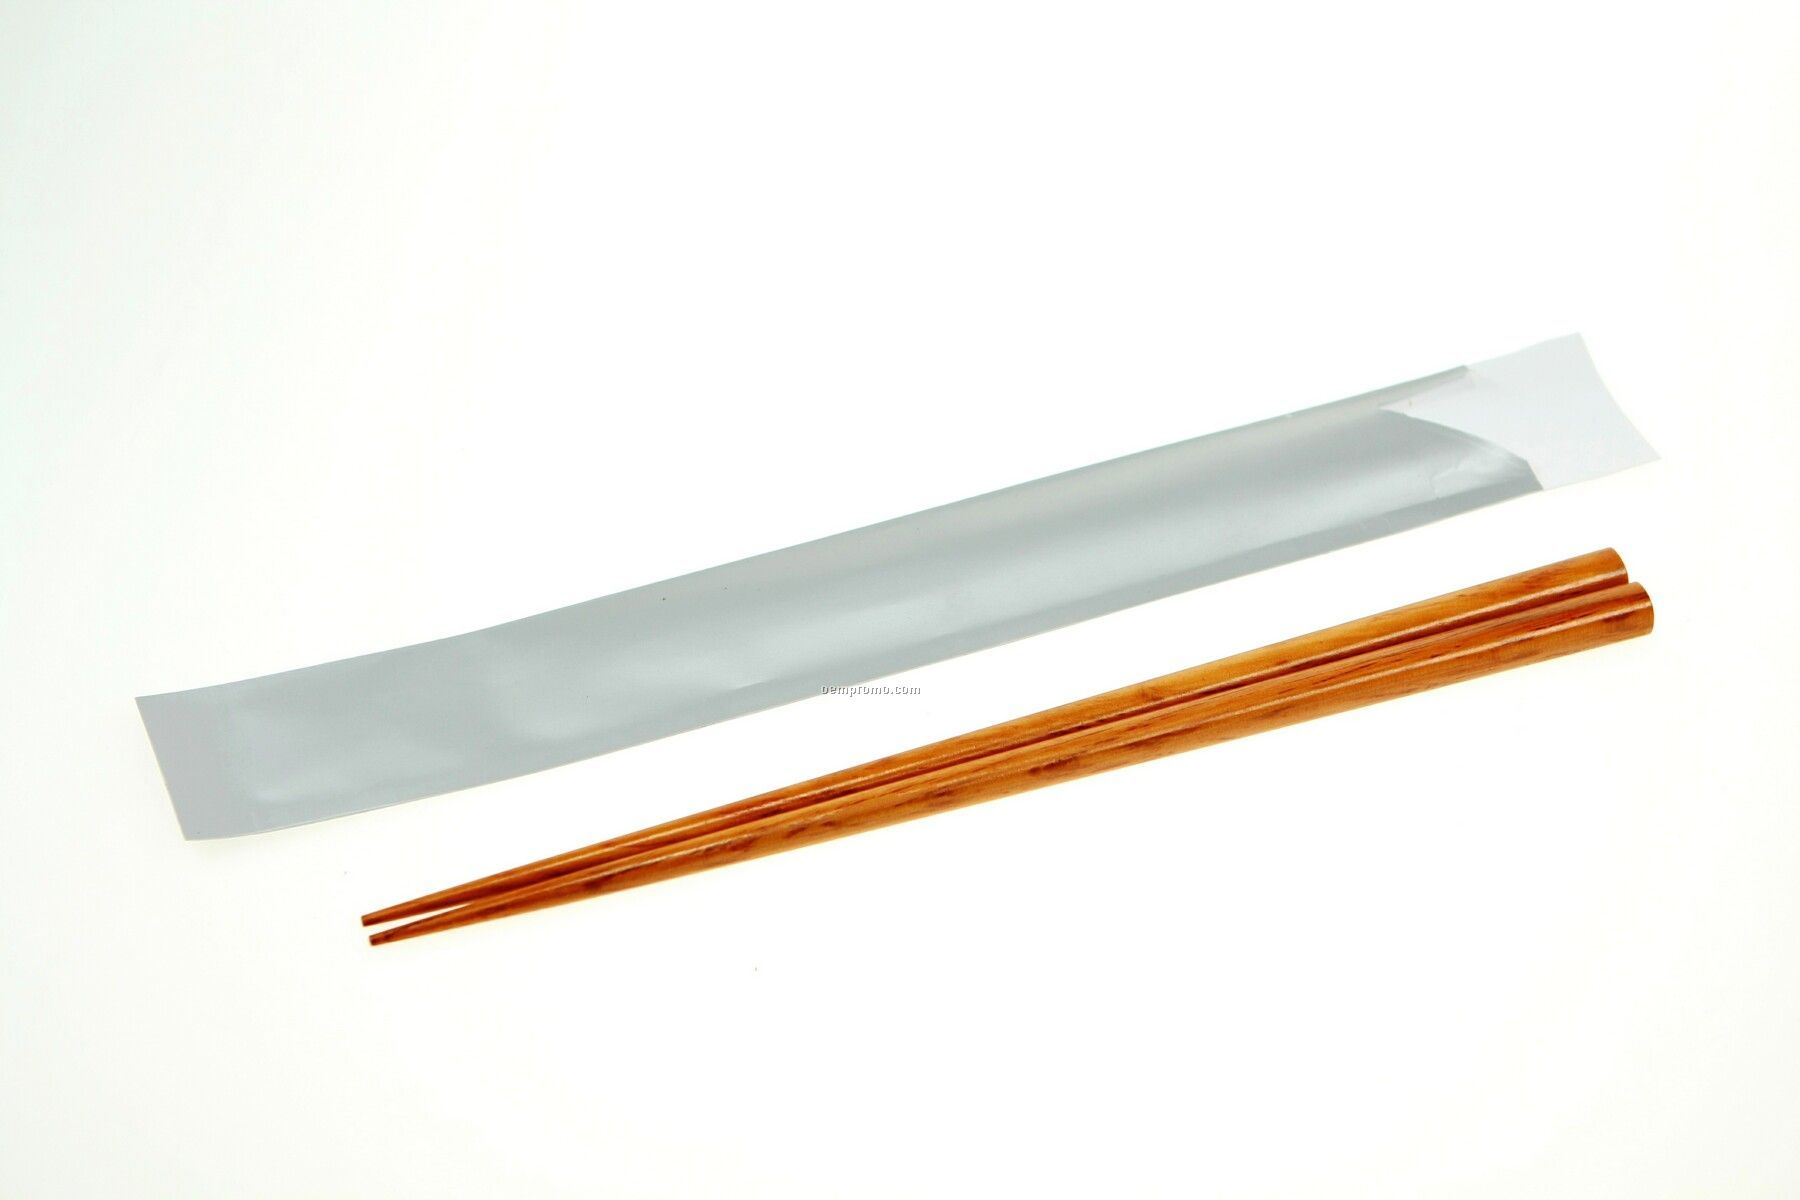 Wooden Brown Chopsticks In Silver Paper Pouch